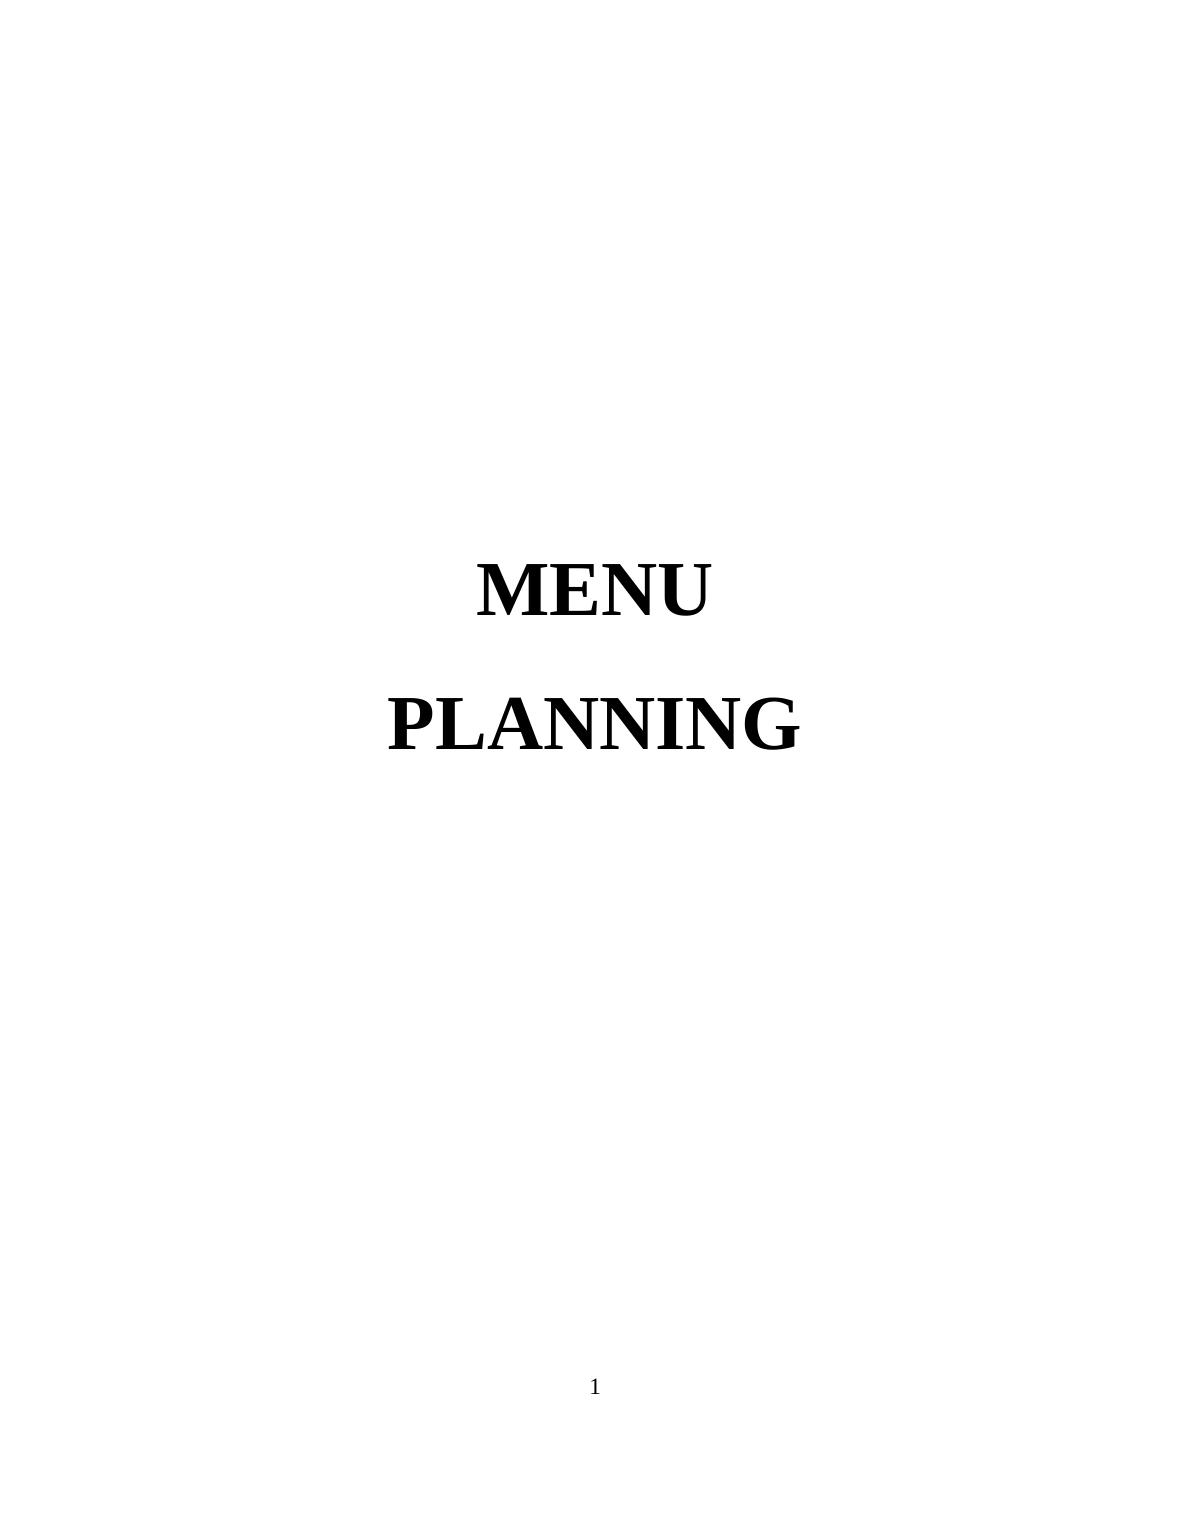 Aspects of Menu Planning | Report_1